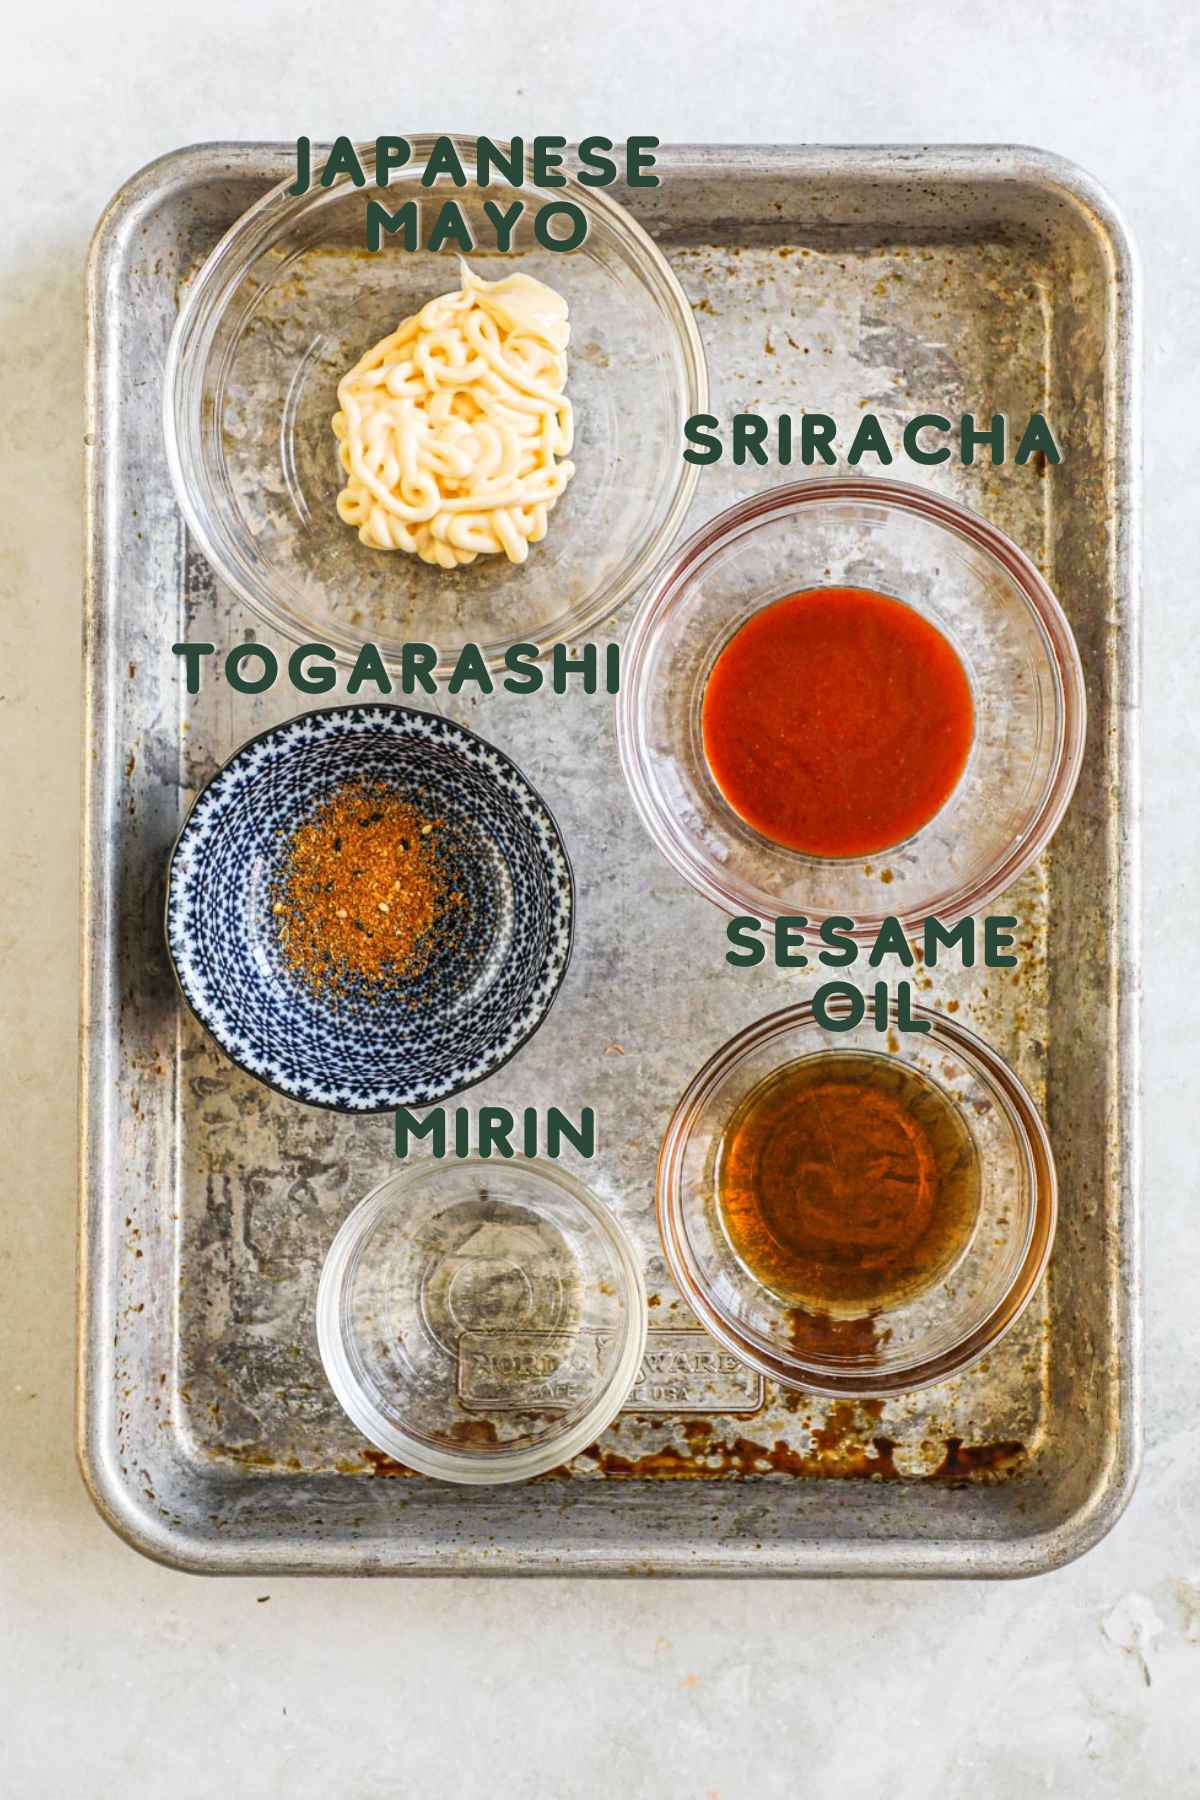 Ingredients to make karaage sliders spicy mayo, japanese mayo, sriracha, togarashi, mirin, sesame oil.